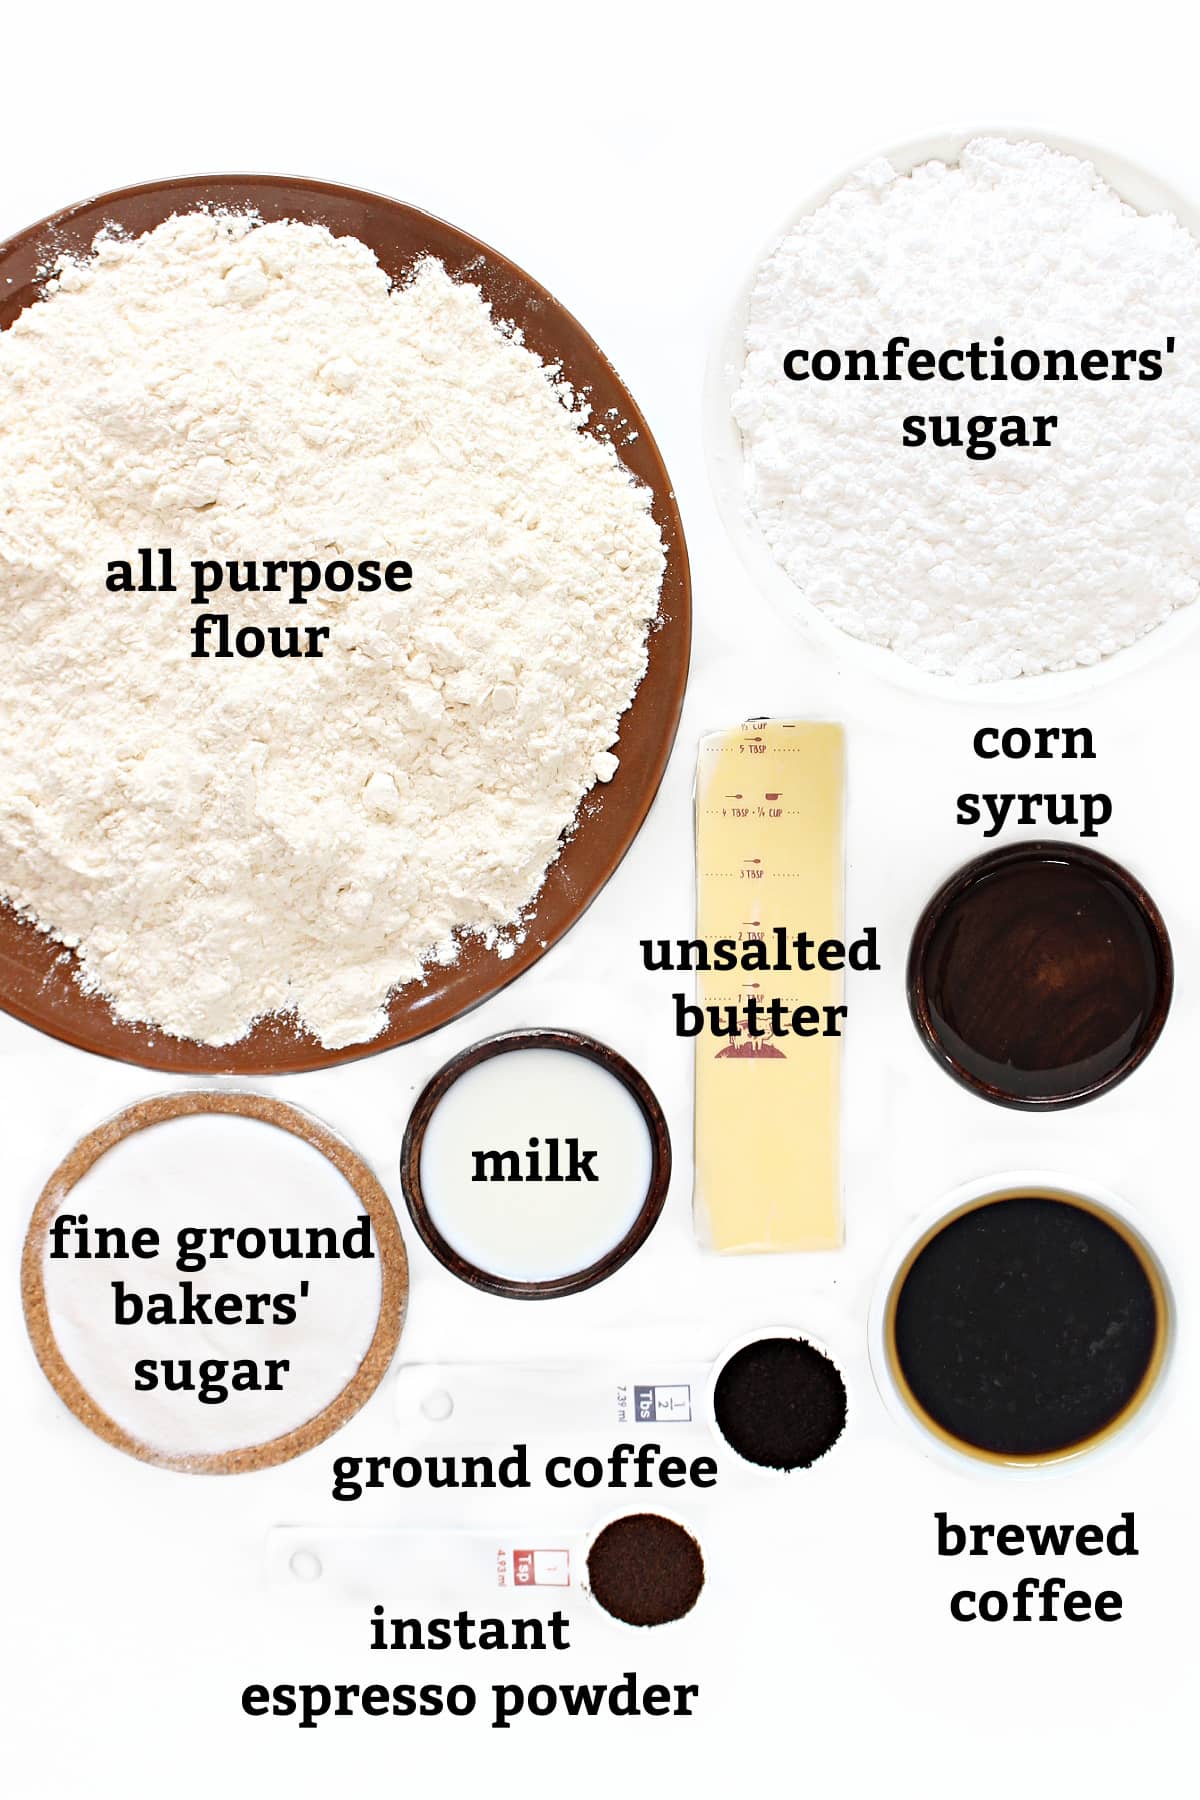 Ingredients: flour, powdered sugar, bakers sugar, milk, butter, corn syrup, ground coffee, espresso powder, brewed coffee.